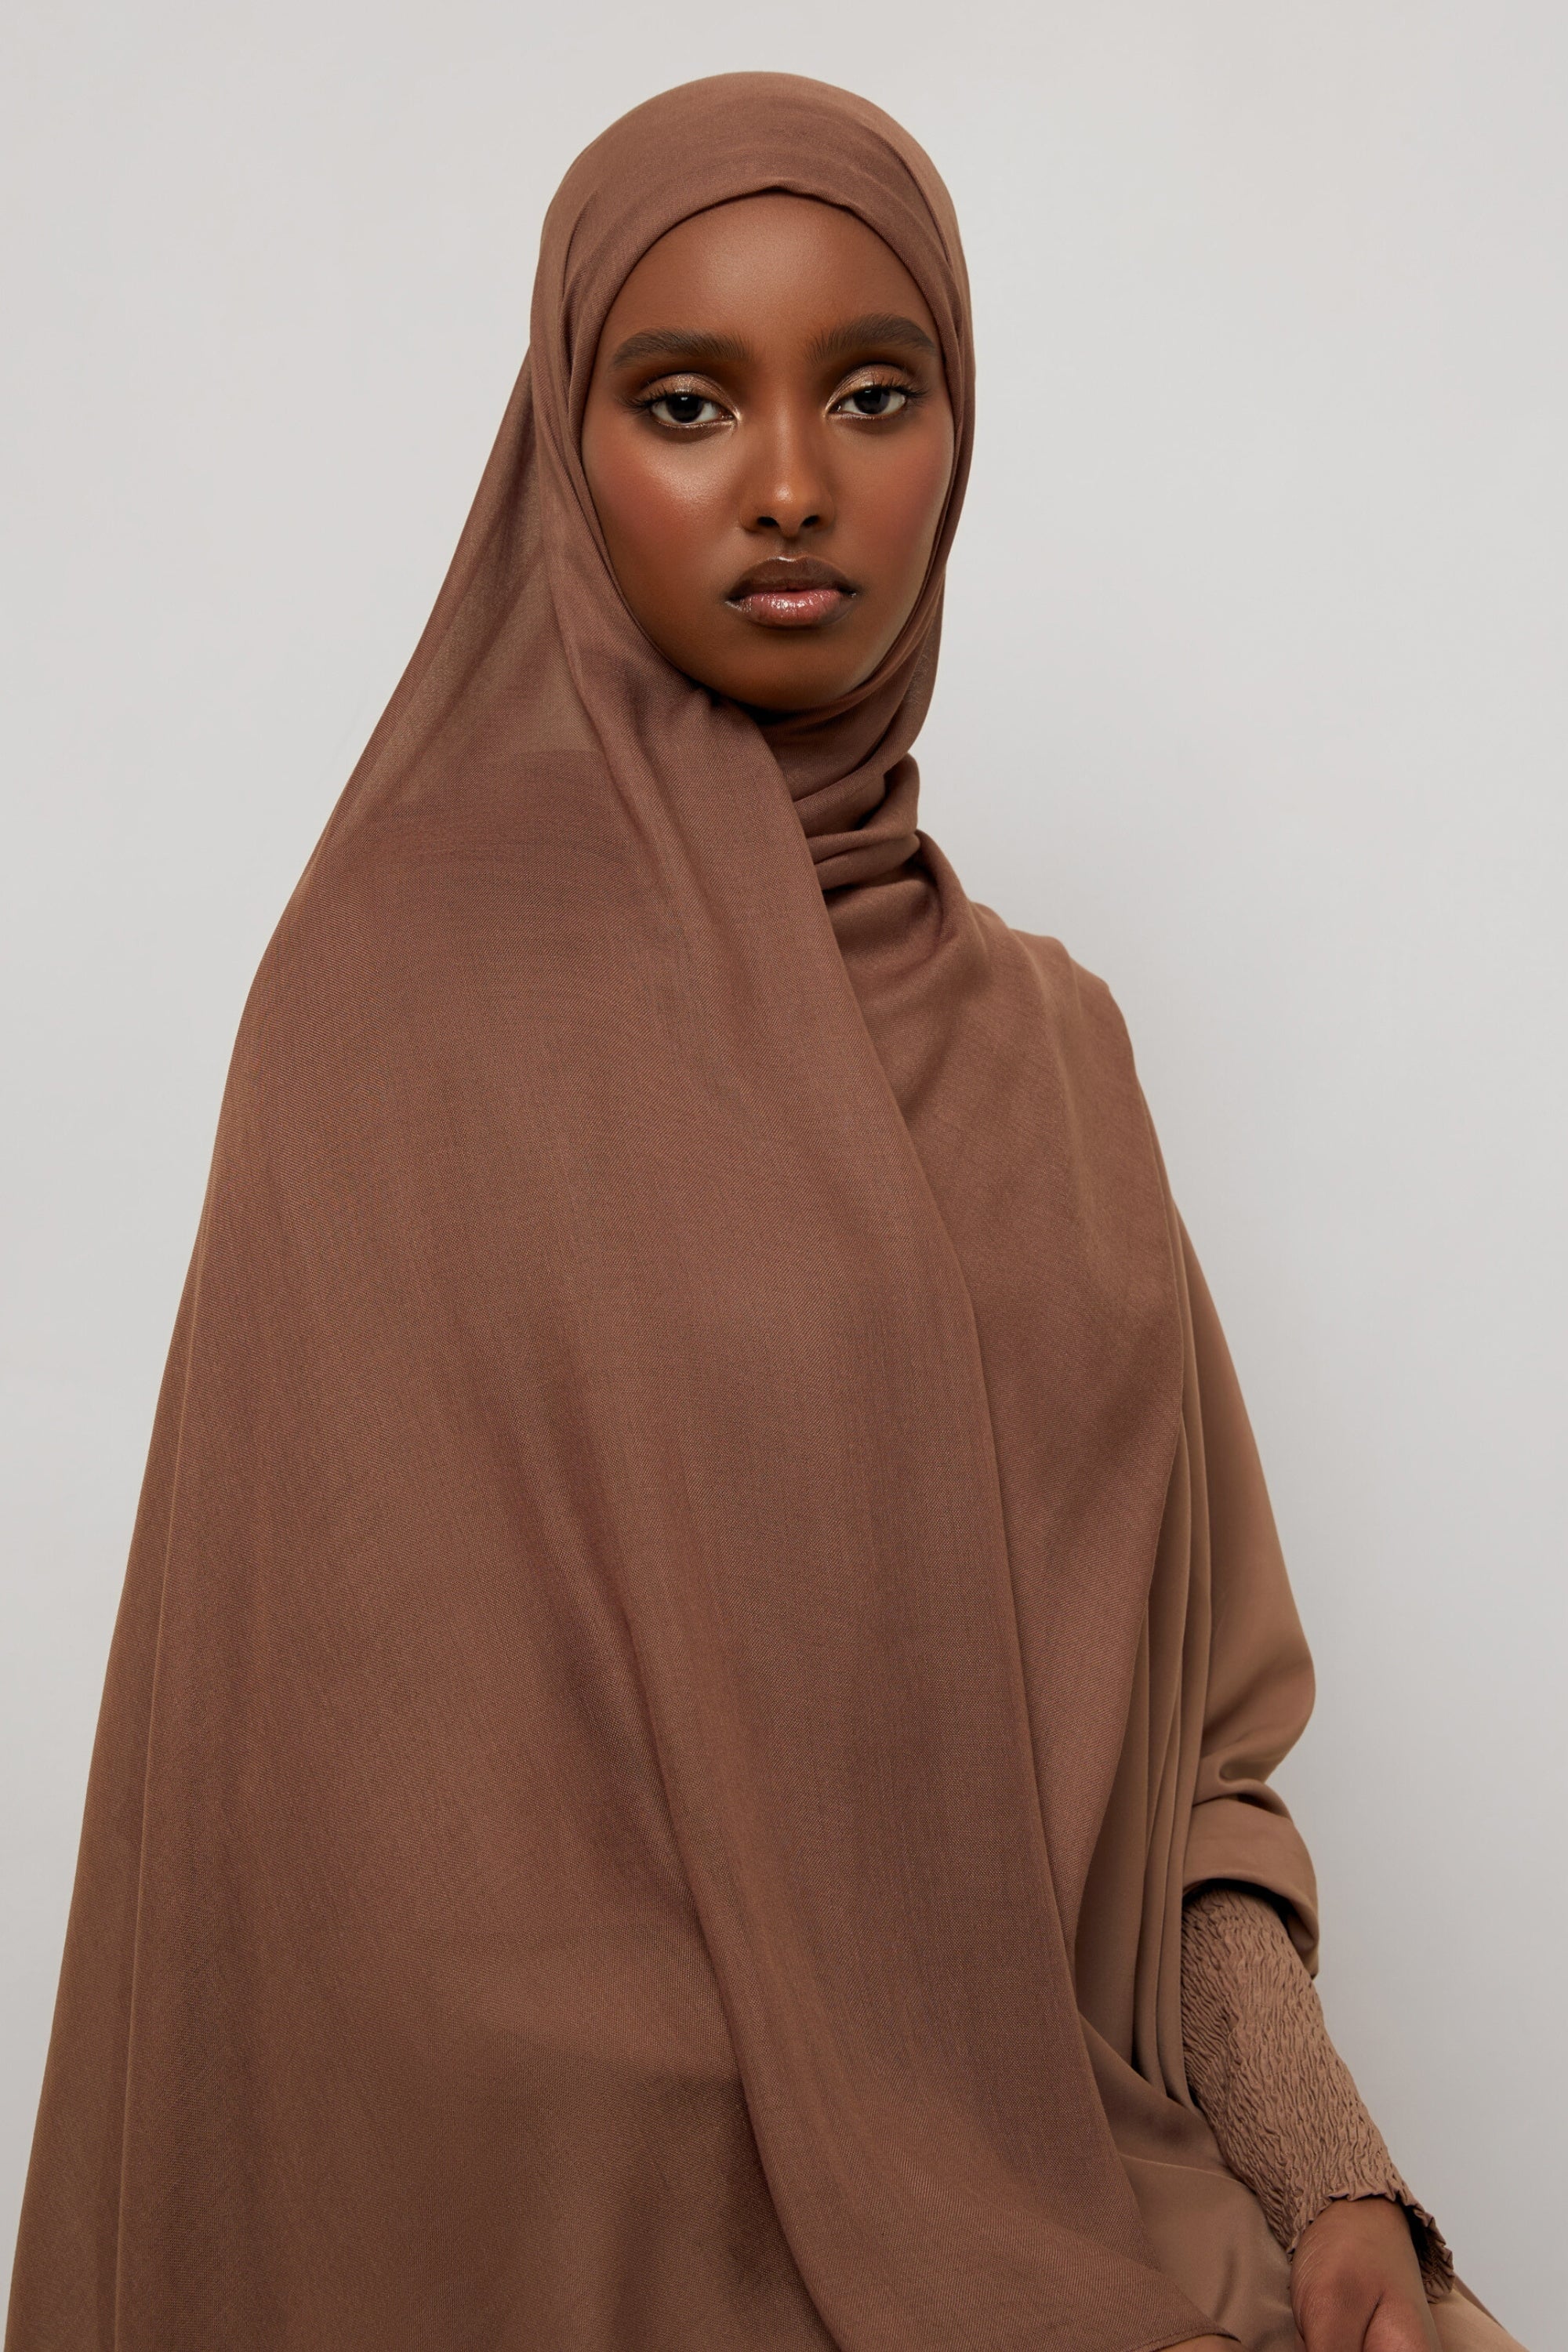 Bamboo Woven Hijab - Cocoa Brown epschoolboard 